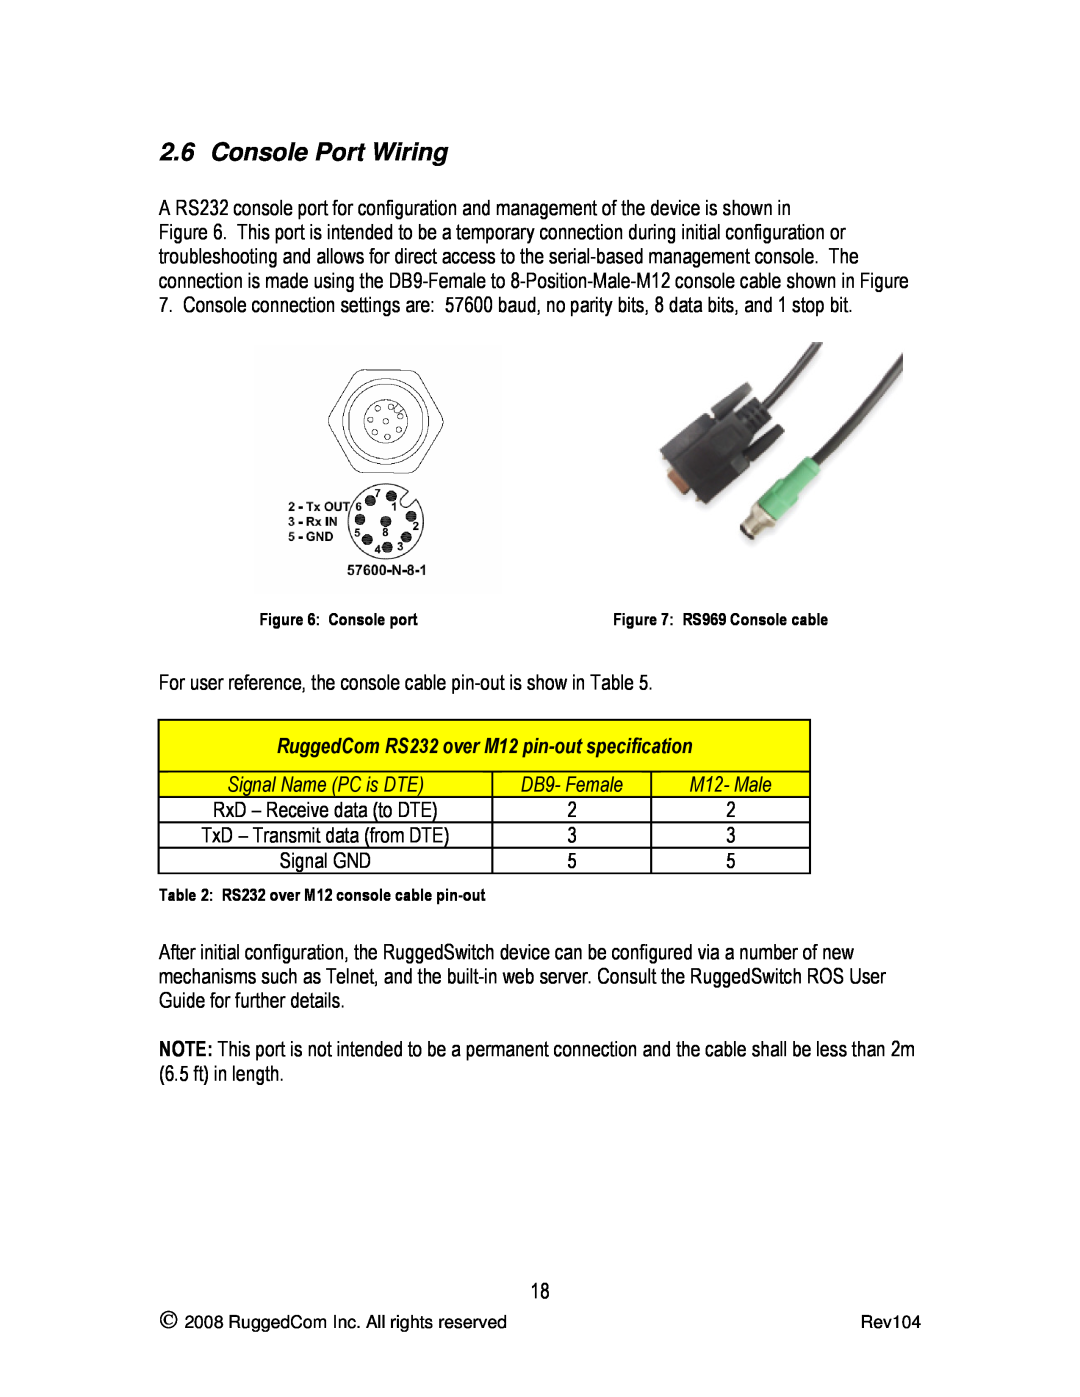 RuggedCom RS969 manual Console Port Wiring 